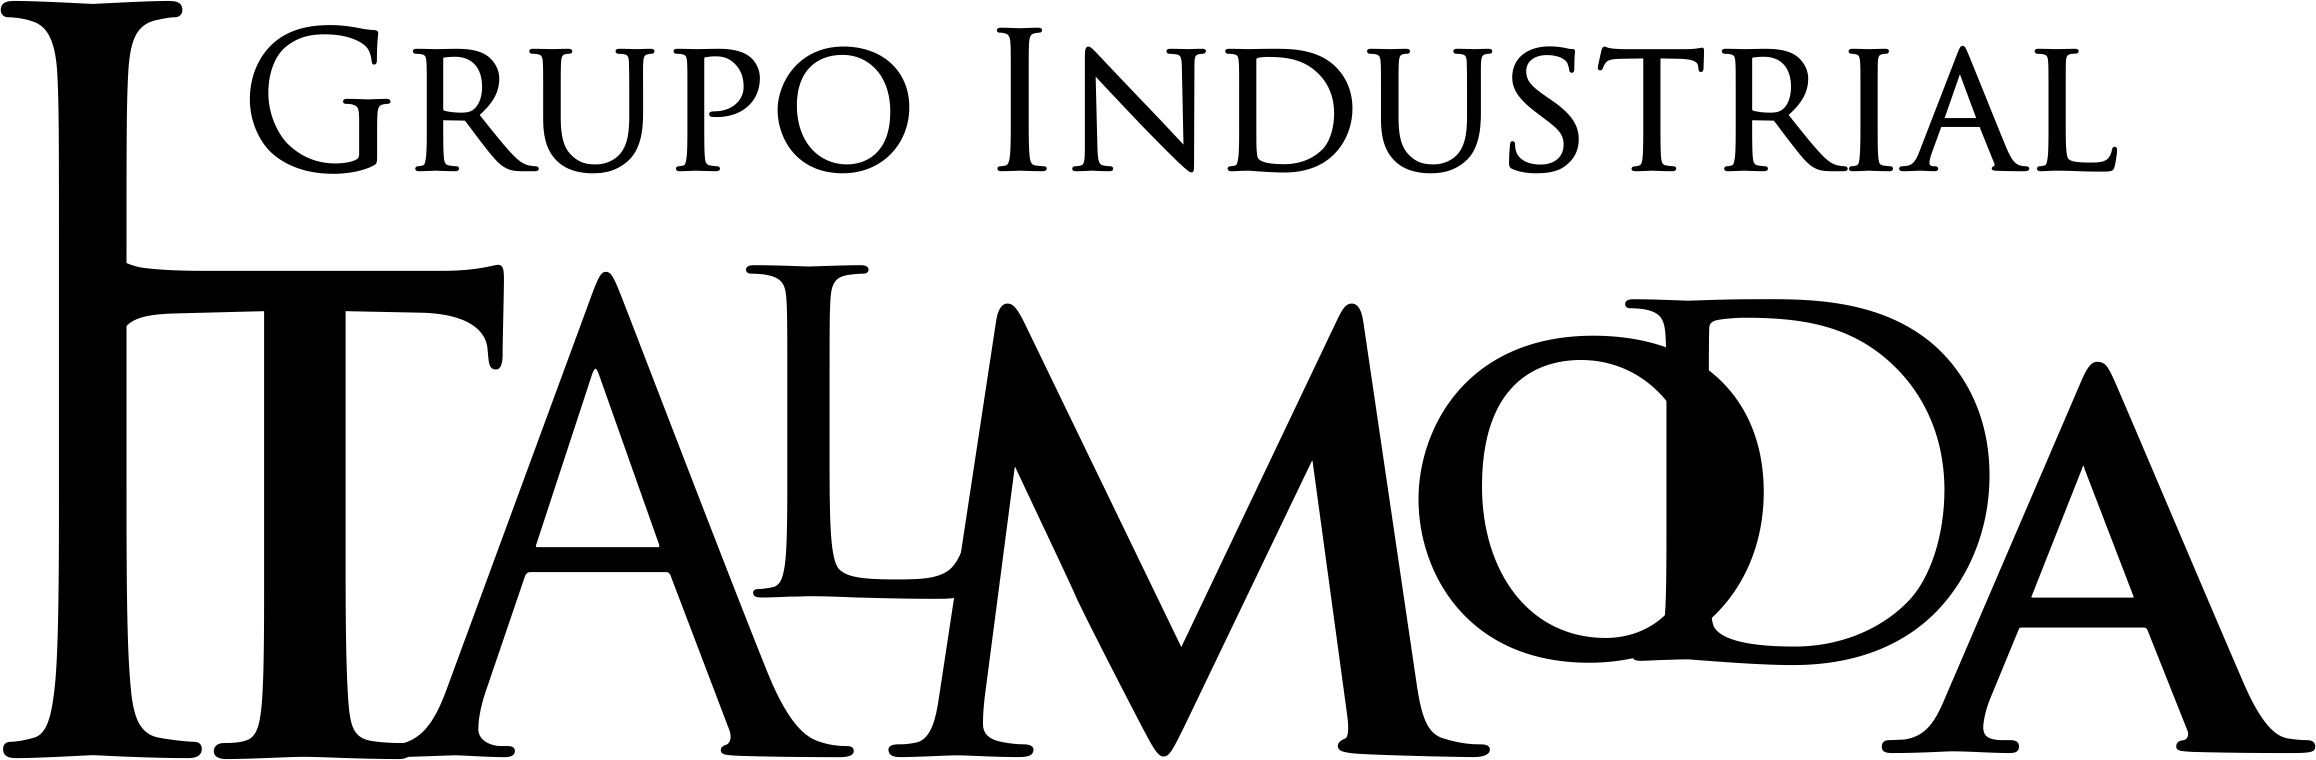 Grupo Industrial Italmoda  Logo